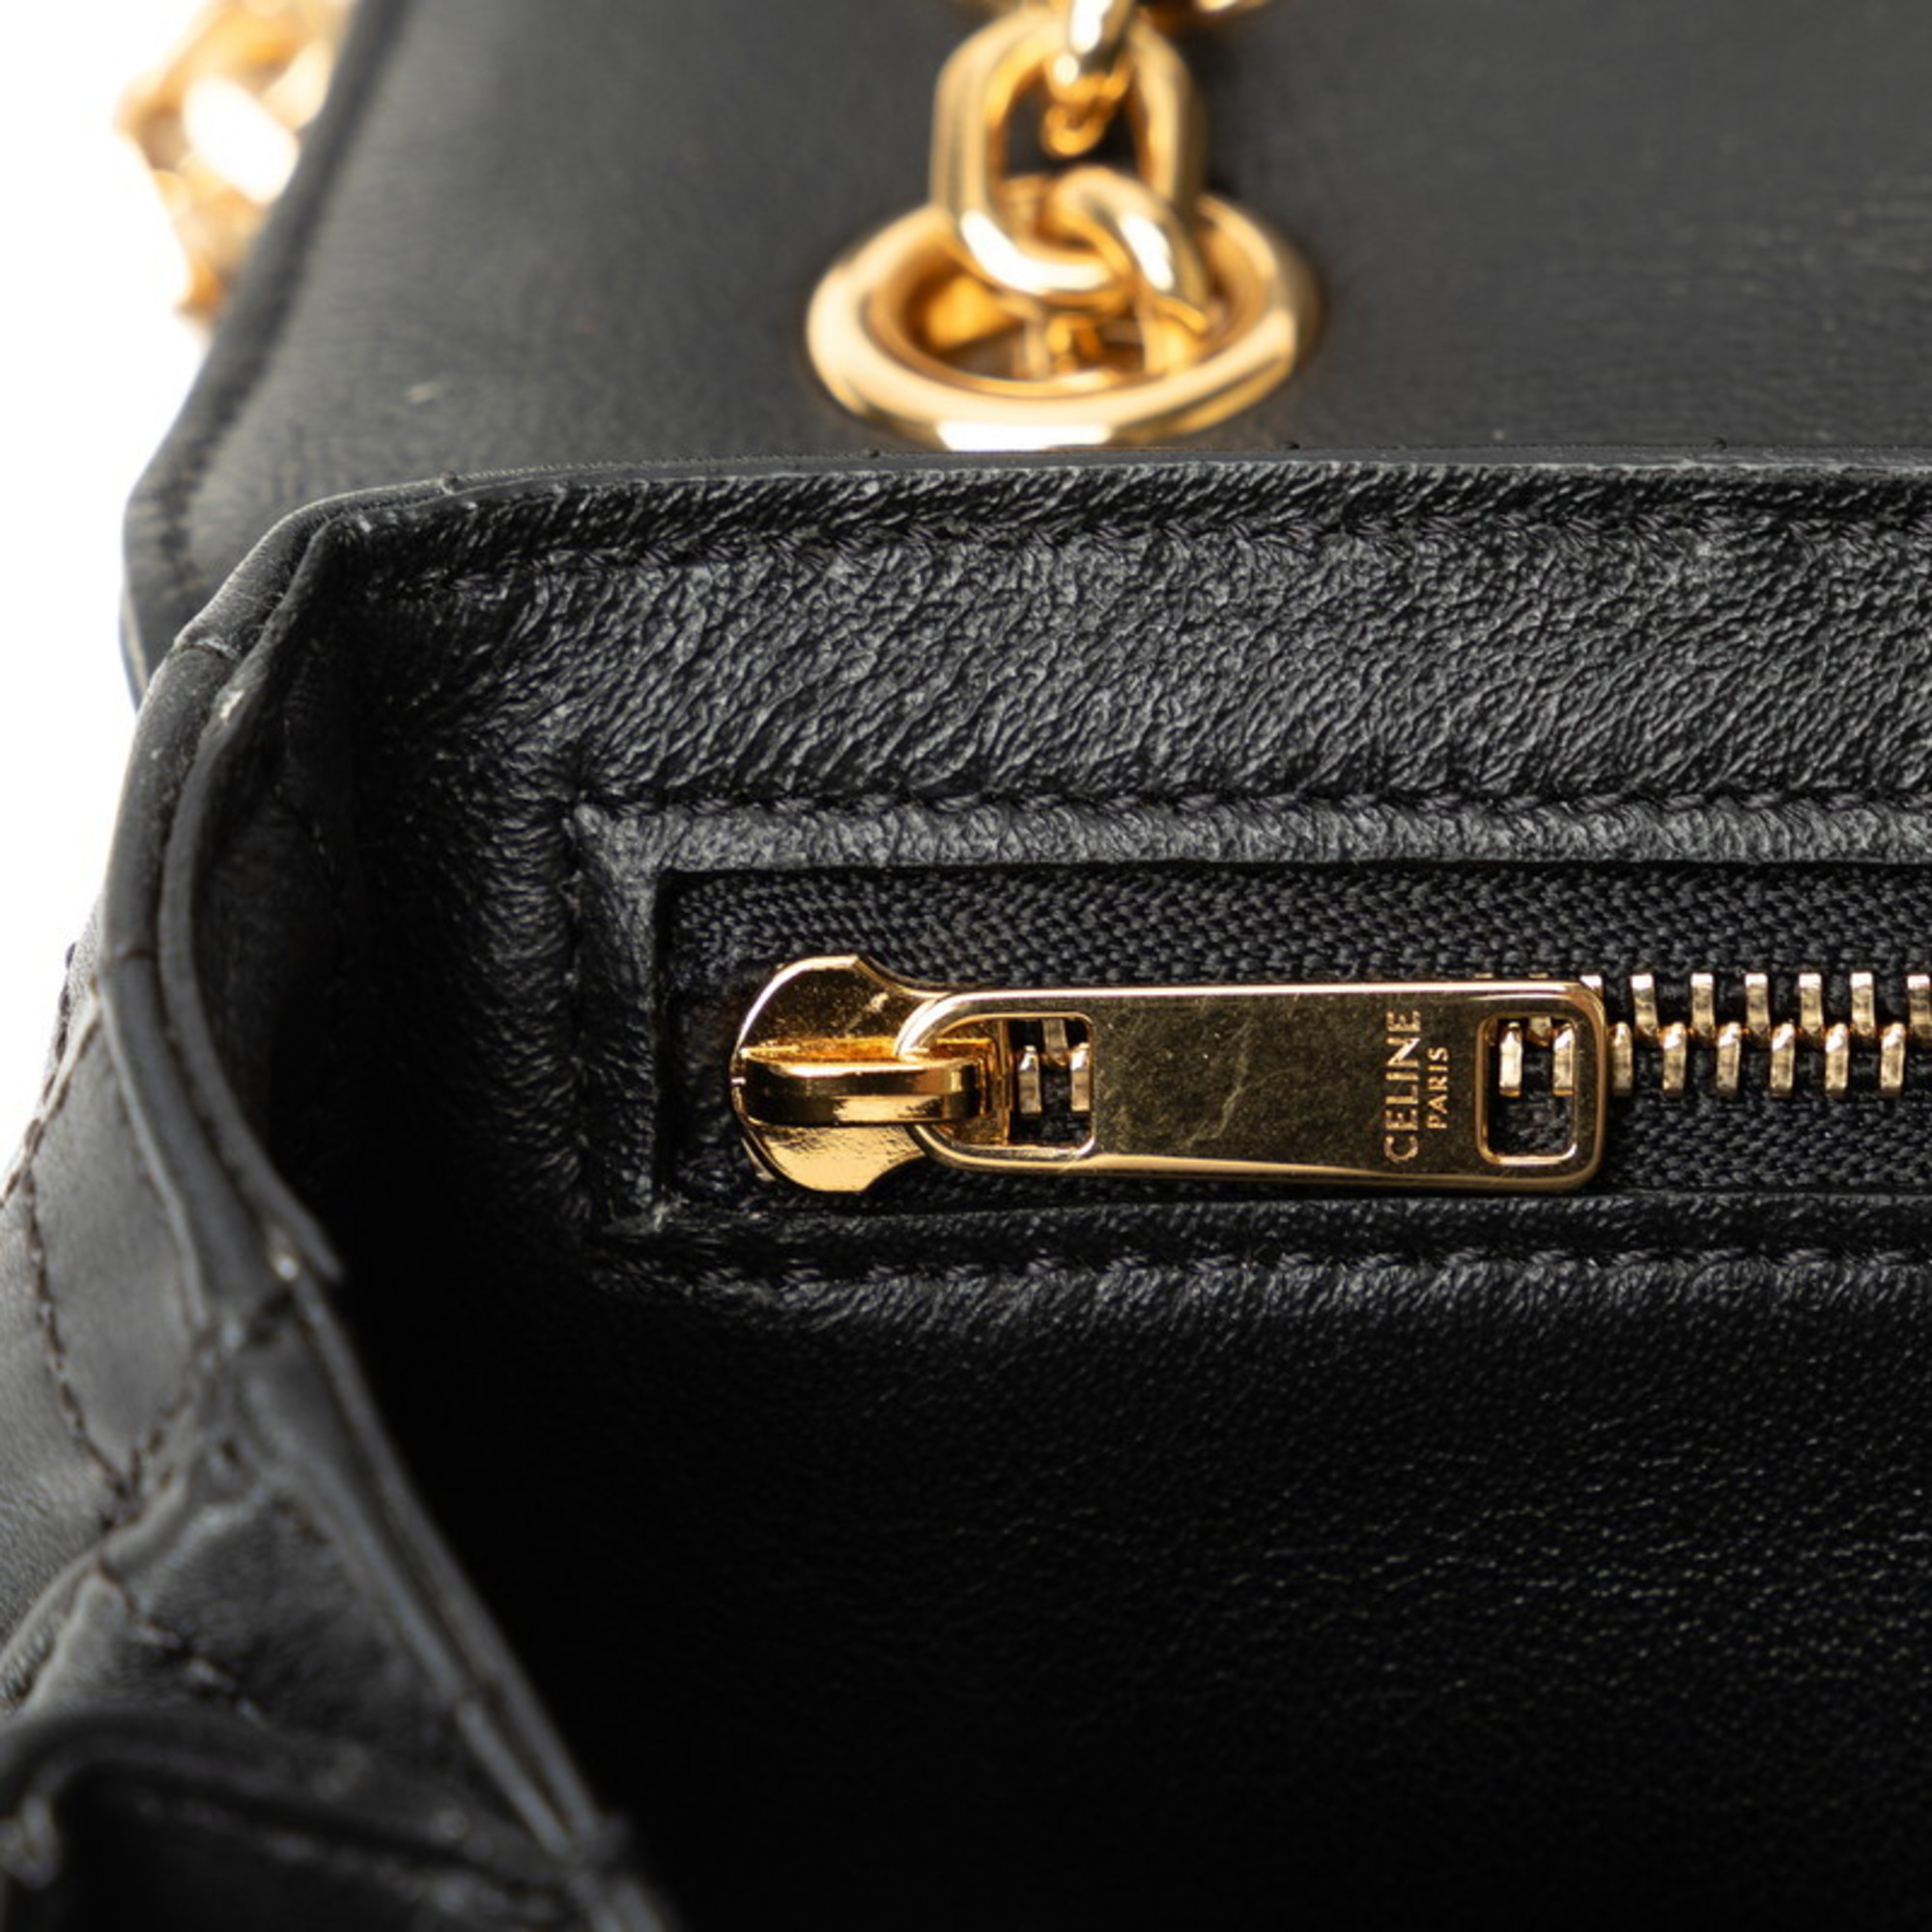 Celine Quilted C Small Chain Shoulder Bag Black Leather Women's CELINE